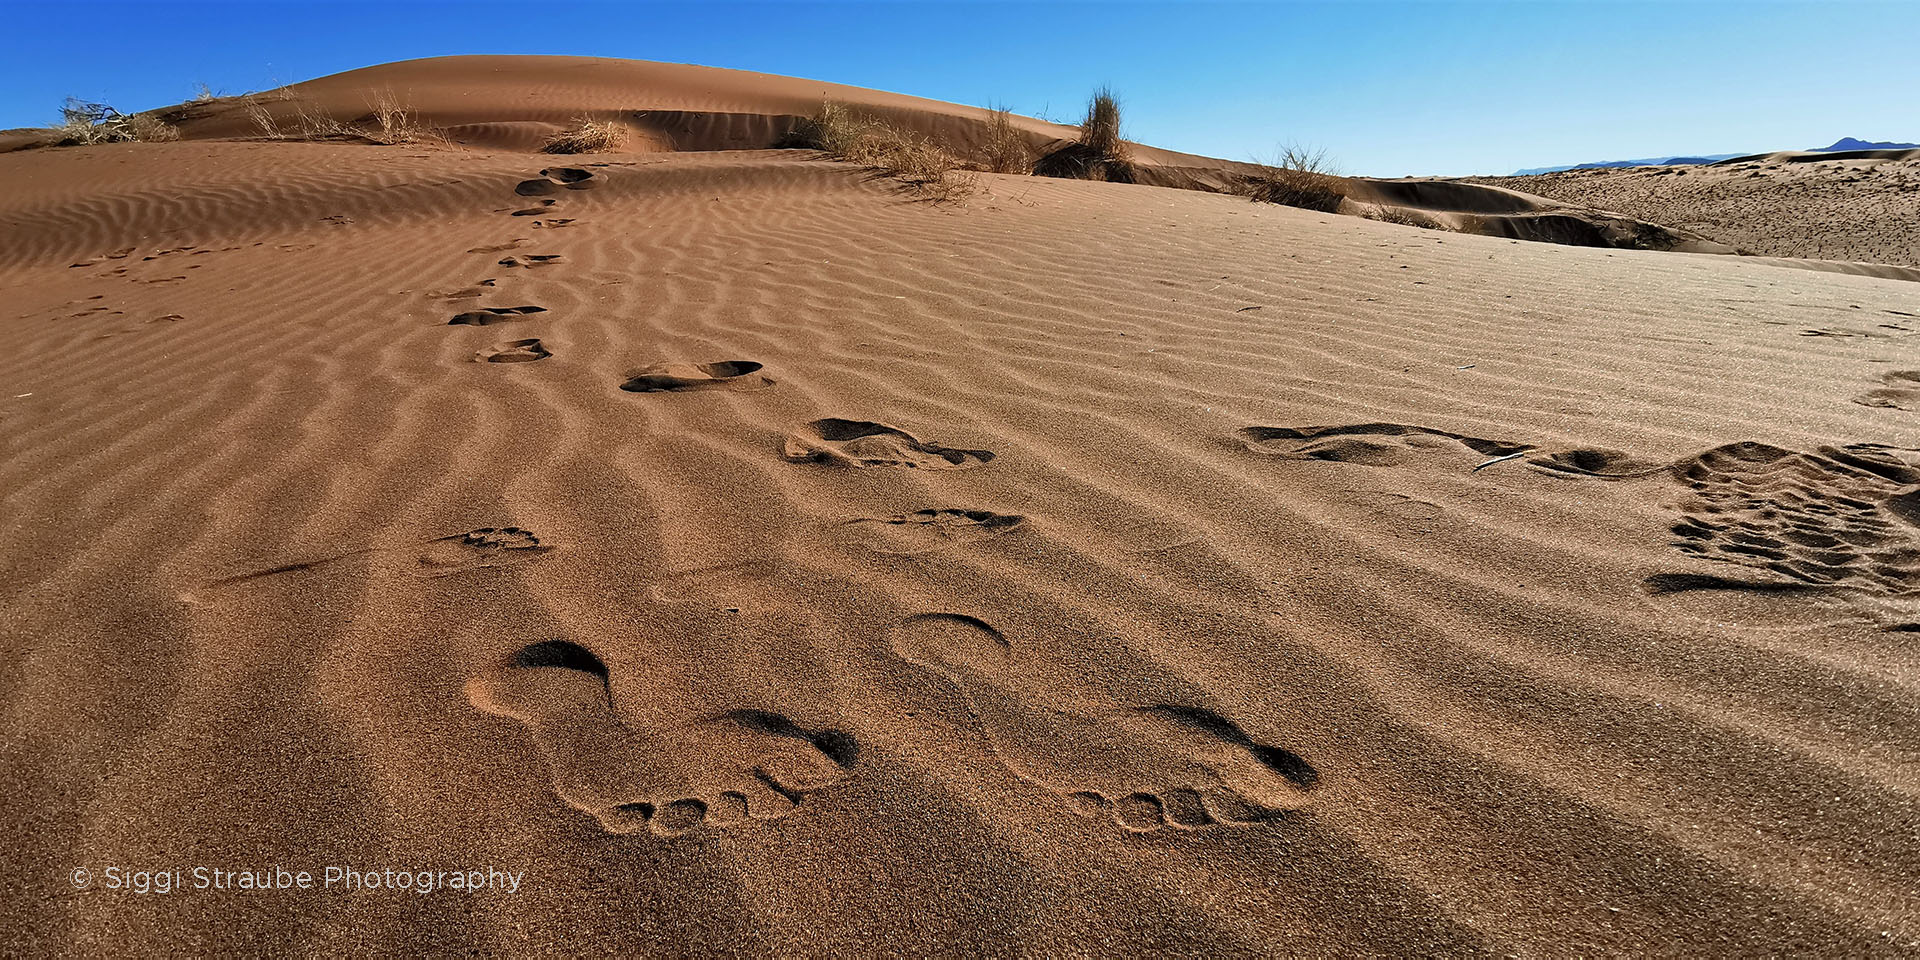 Footsteps on sand dune, Namibia